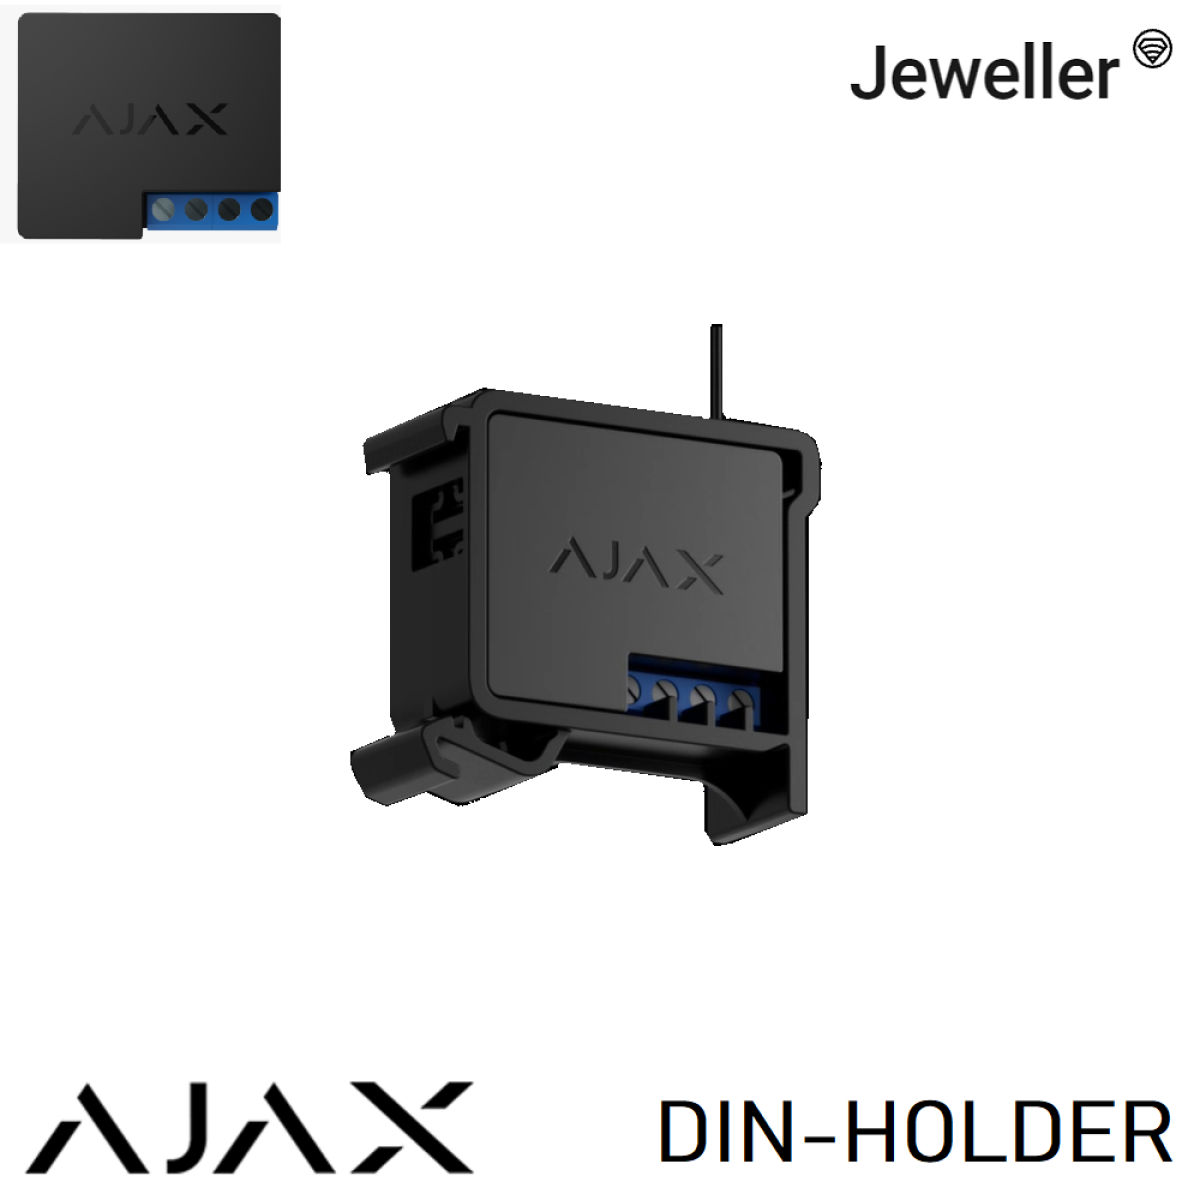 Ajax DIN Holder -Black